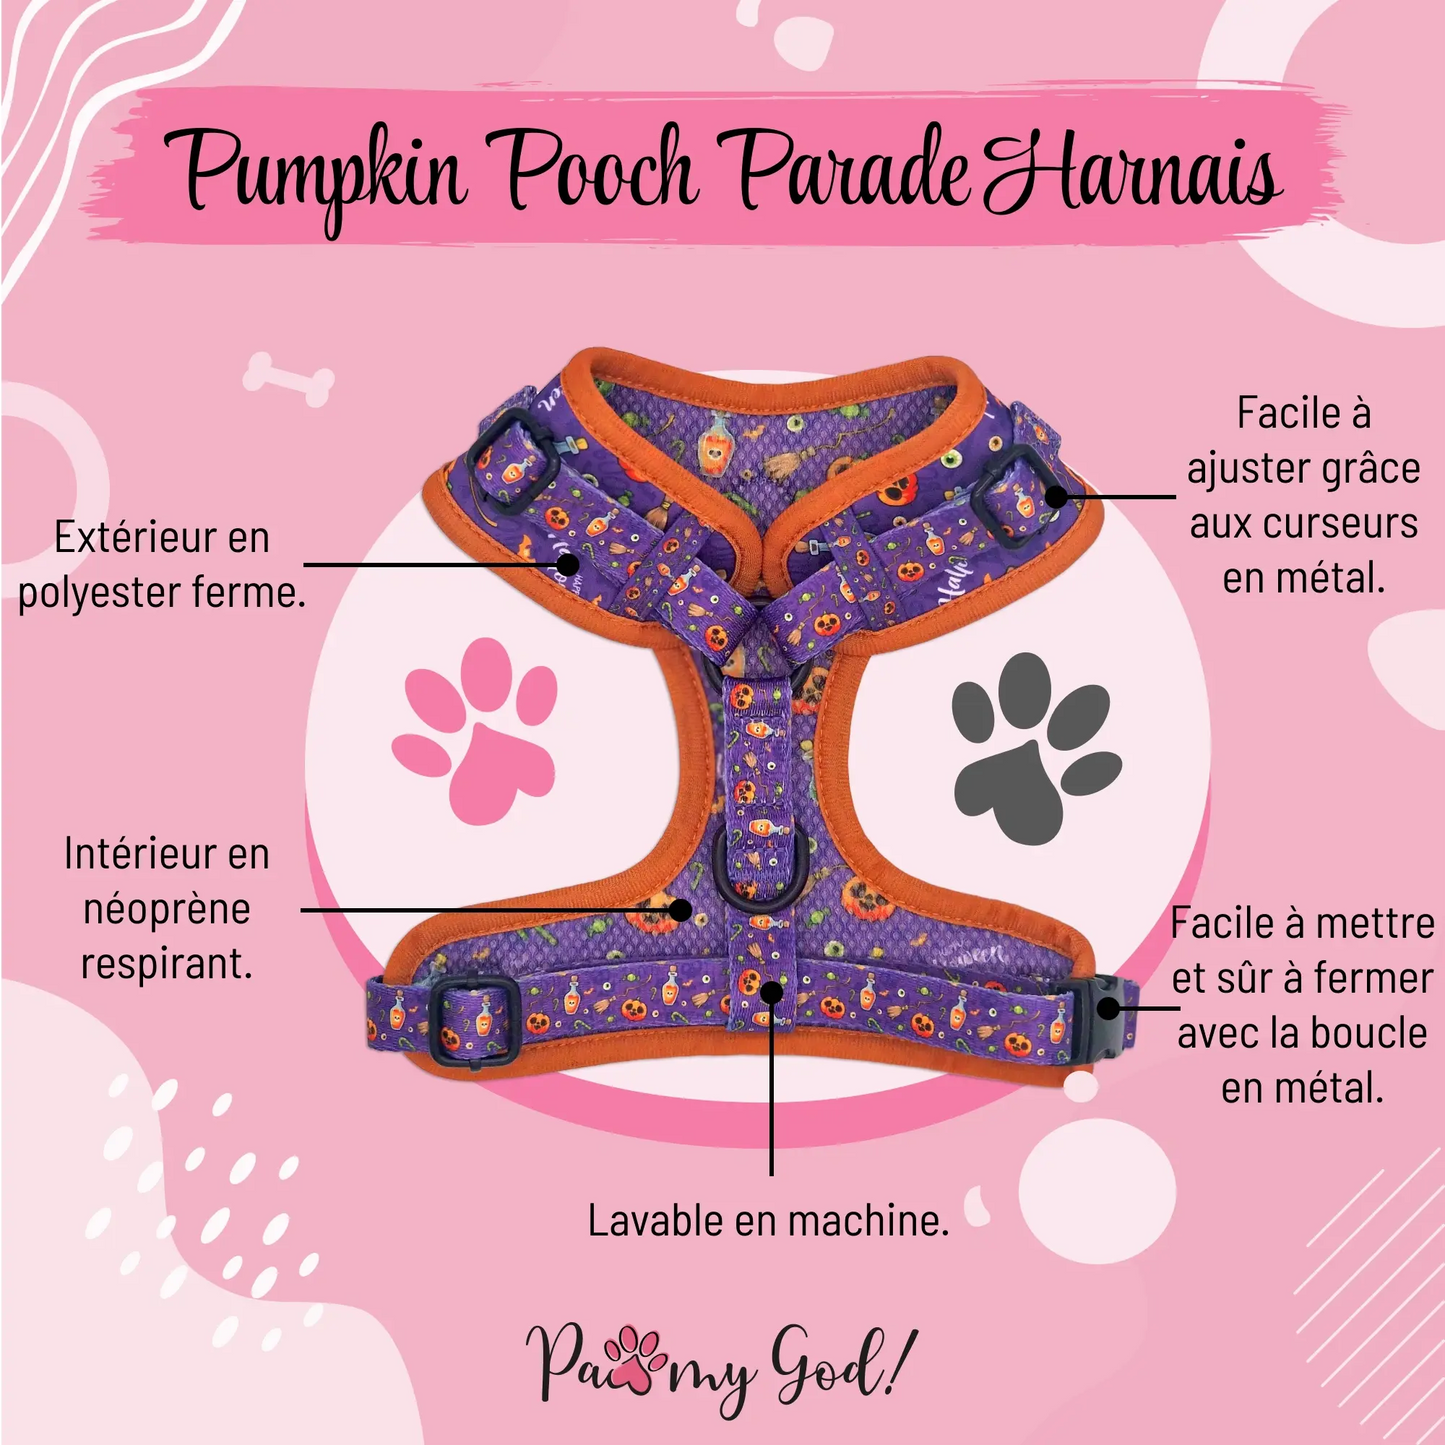 Pumpkin Pooch Parade Harness Features